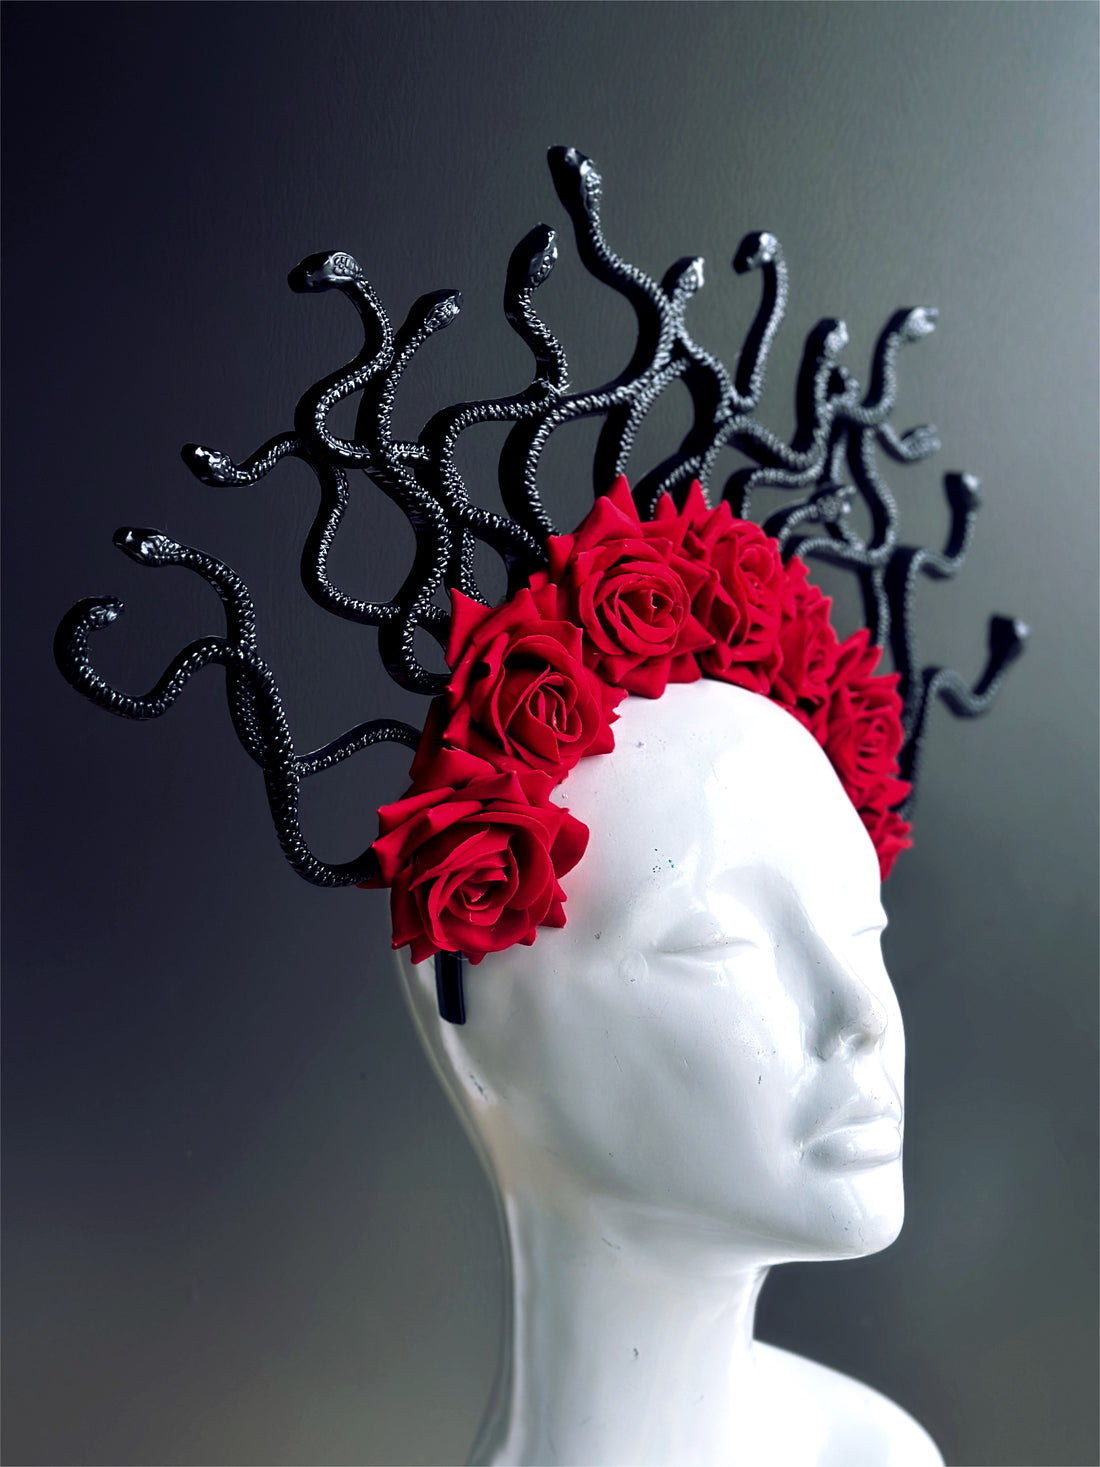 Medusa Snakes With Roses - Red/Black